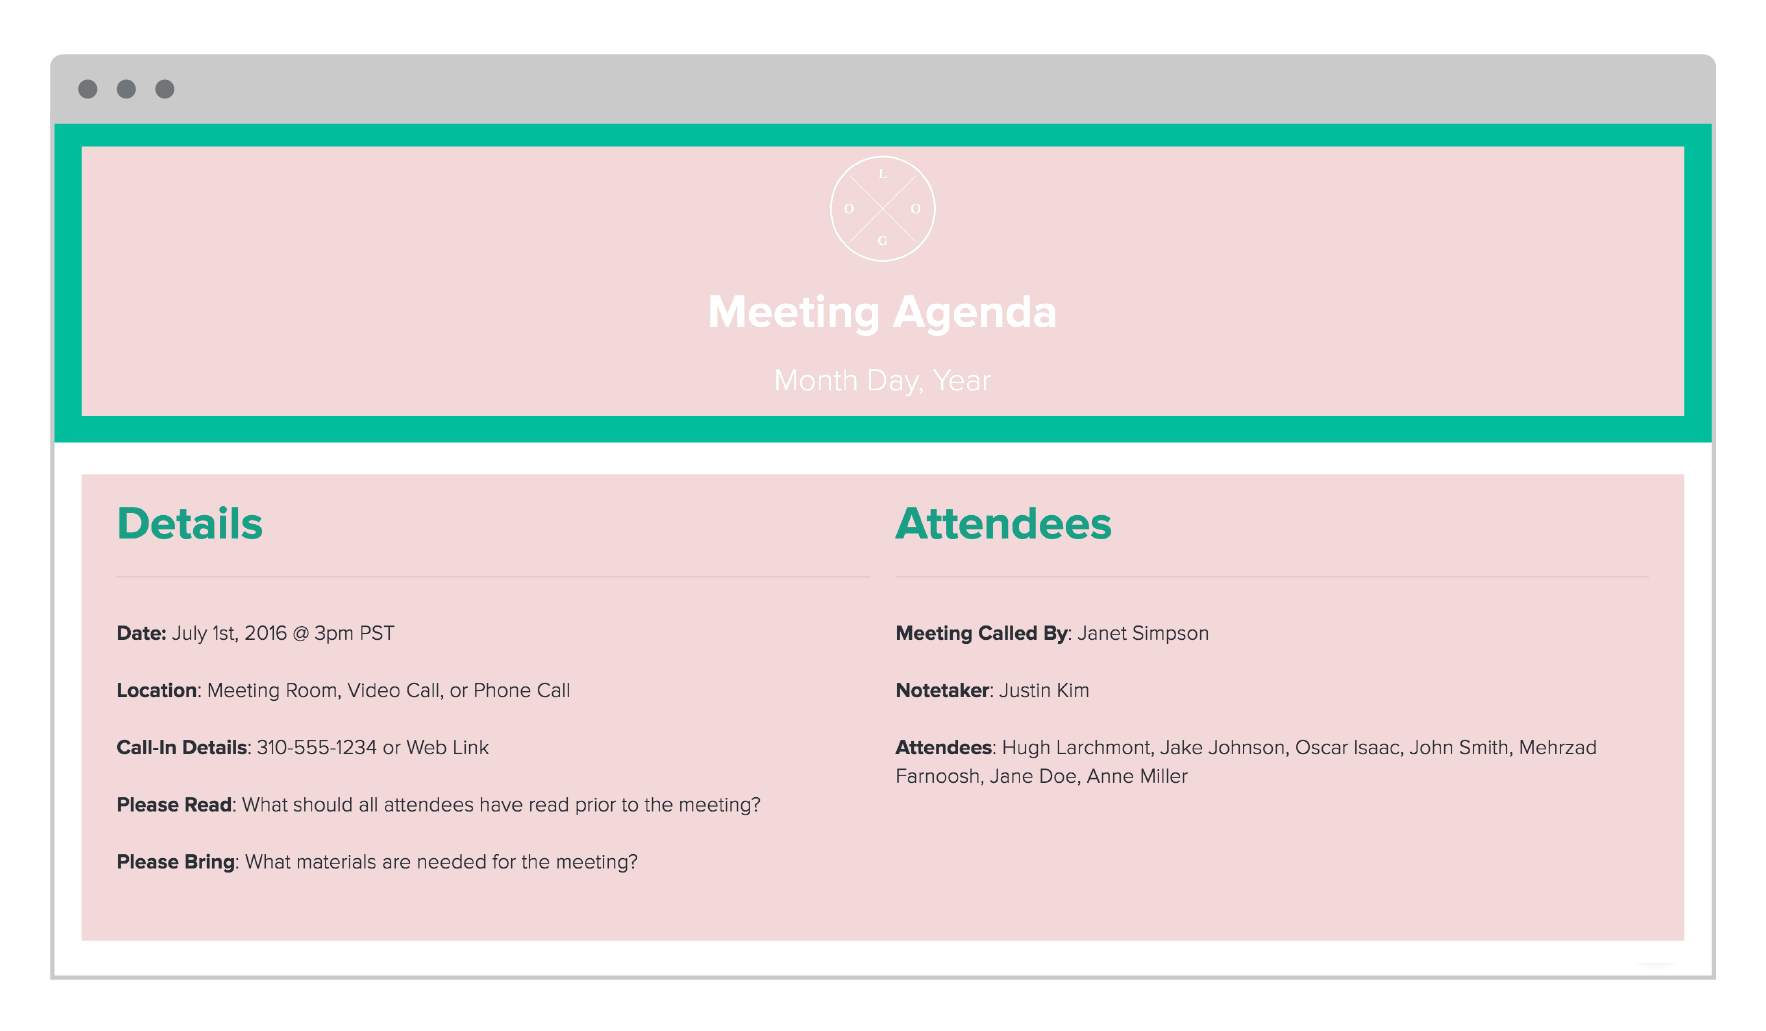 How To Prepare A Meeting Agenda: Prepare The Meeting Logistics